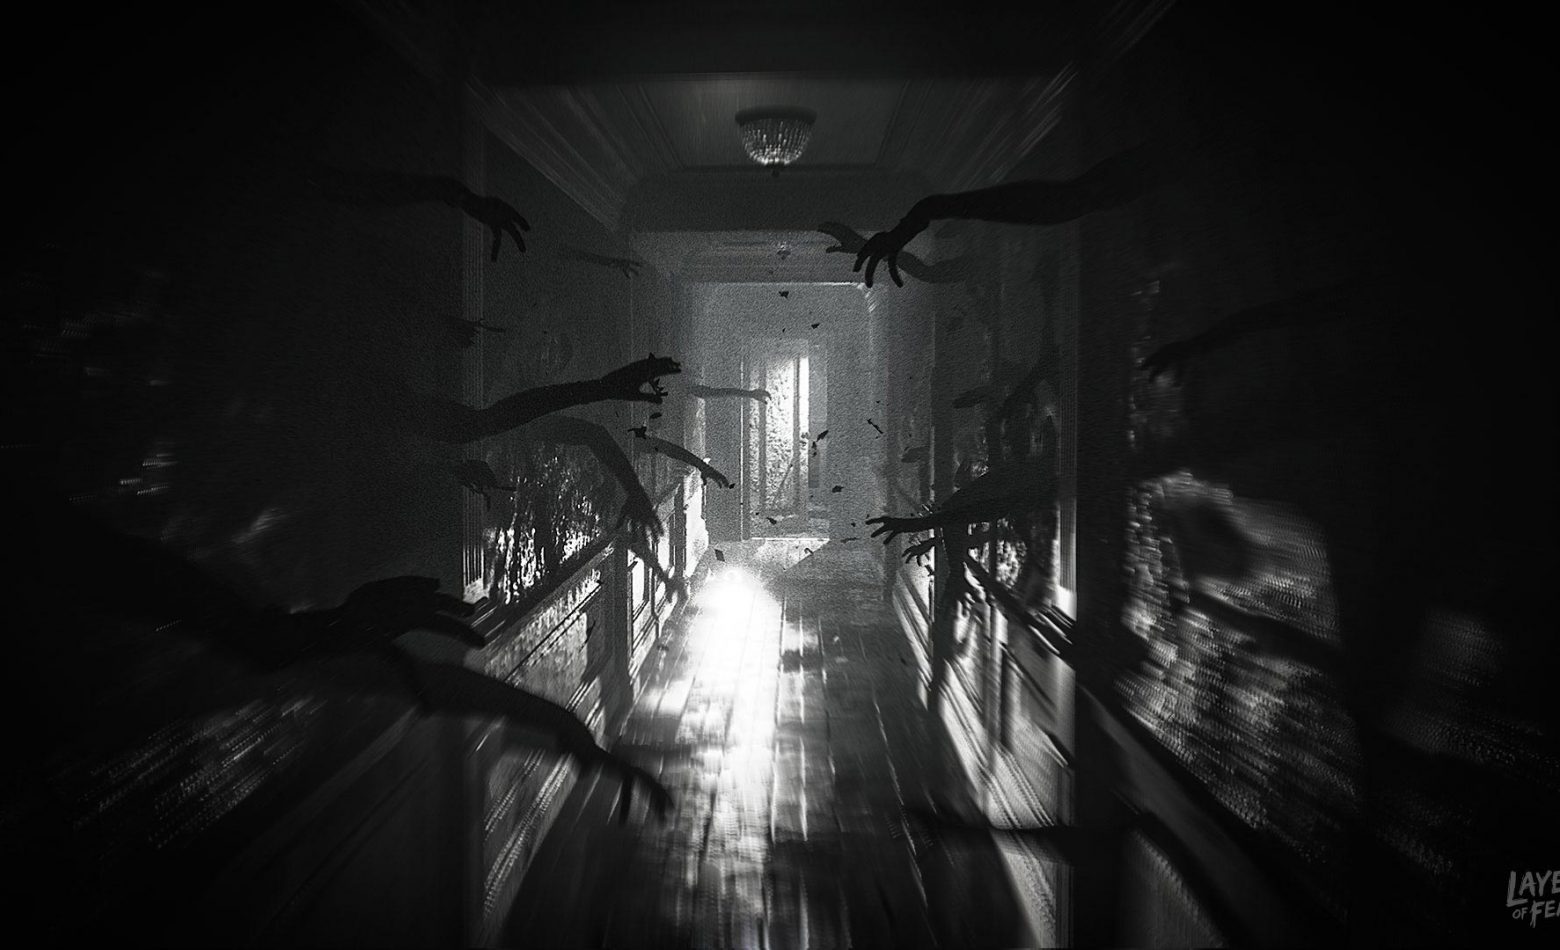 Layers of Fear 2 leva o terror à sétima arte [Gameplay]